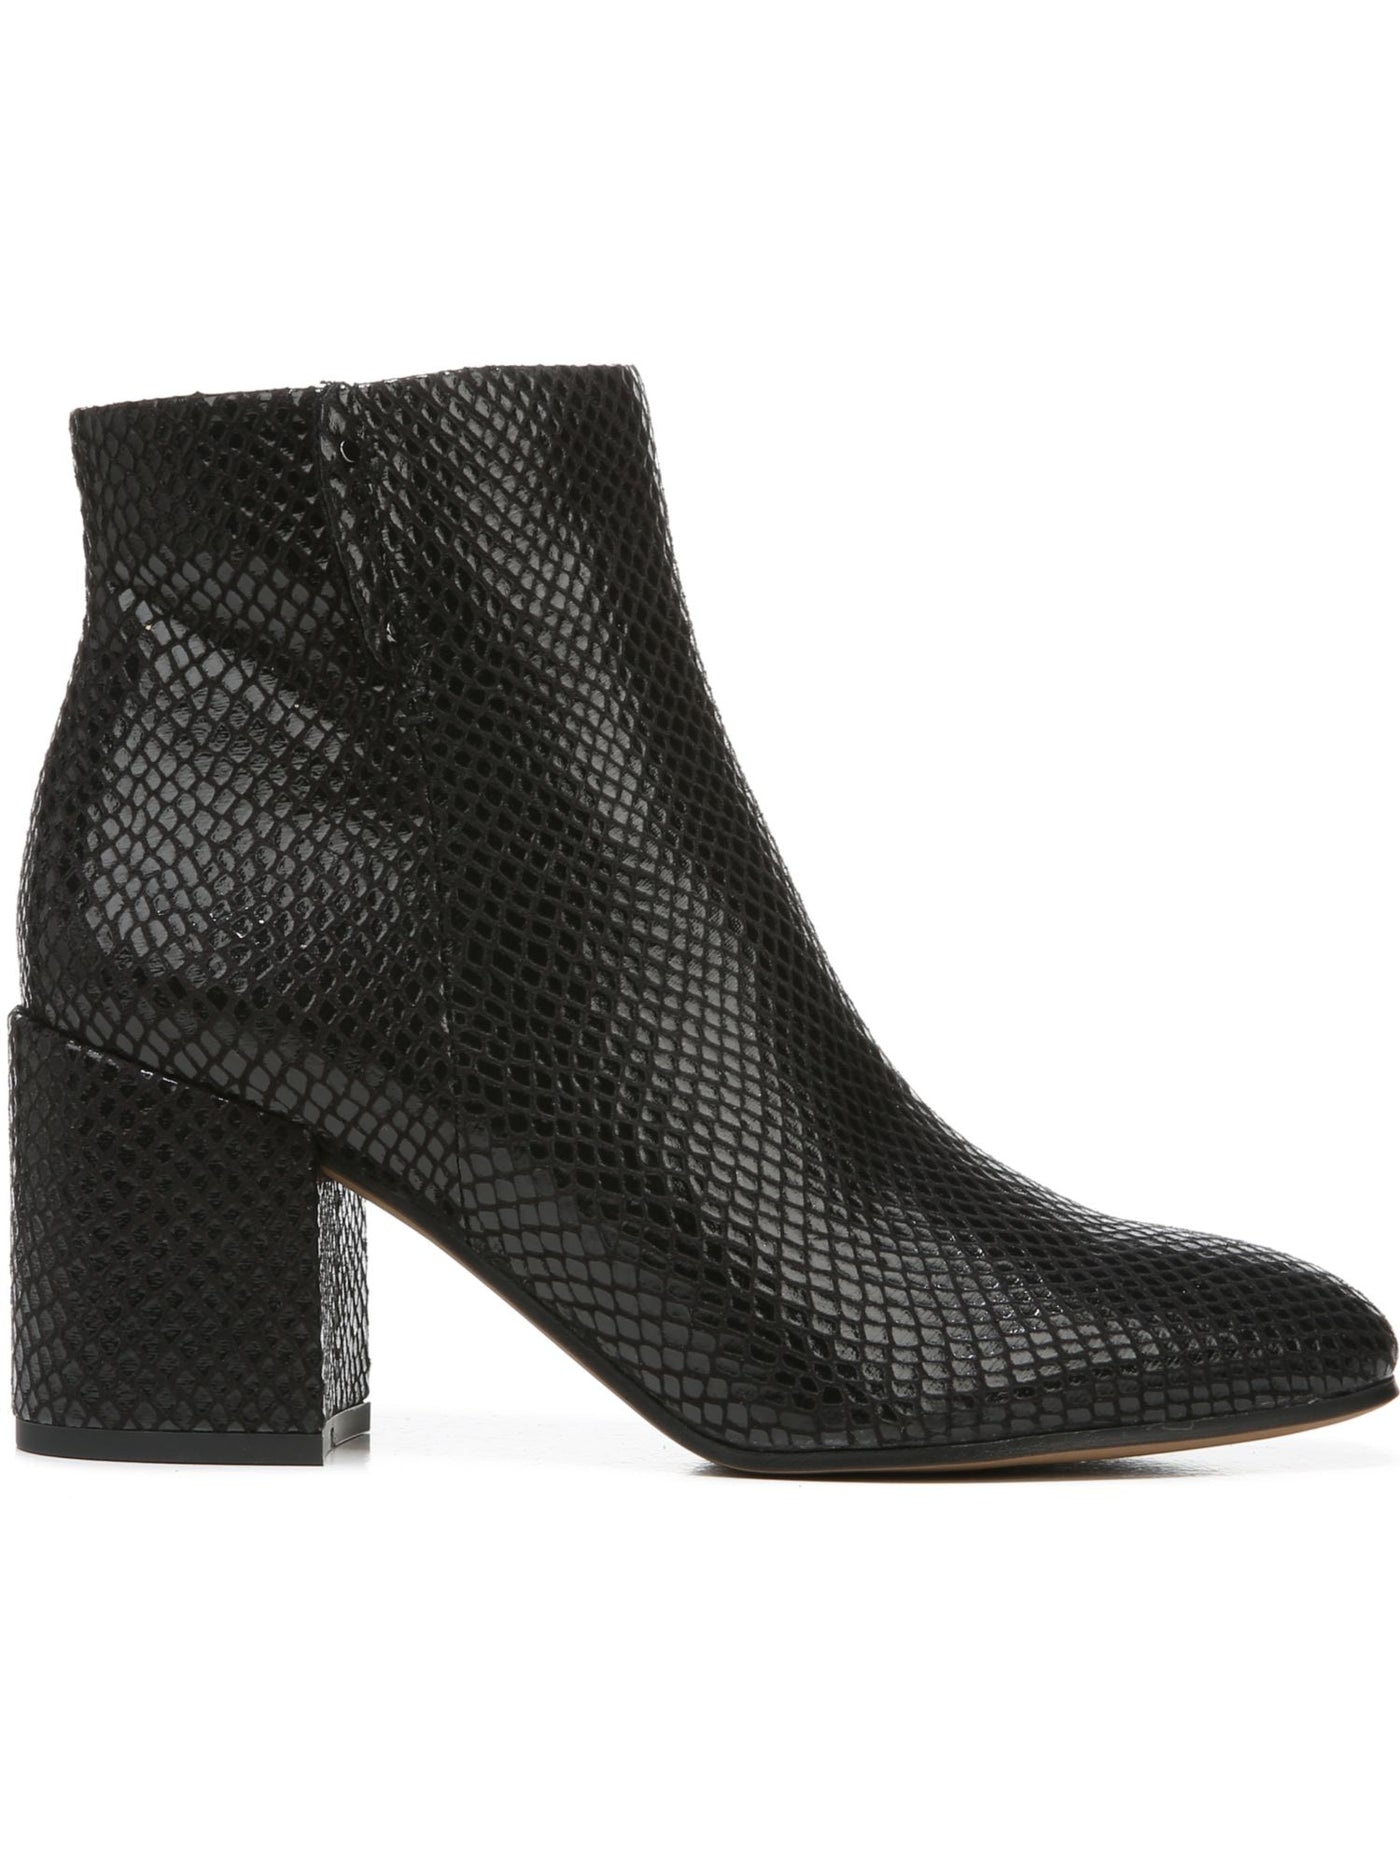 FRANCO SARTO Womens Black Snakeskin Marquee Almond Toe Block Heel Zip-Up Heeled Boots 8 M